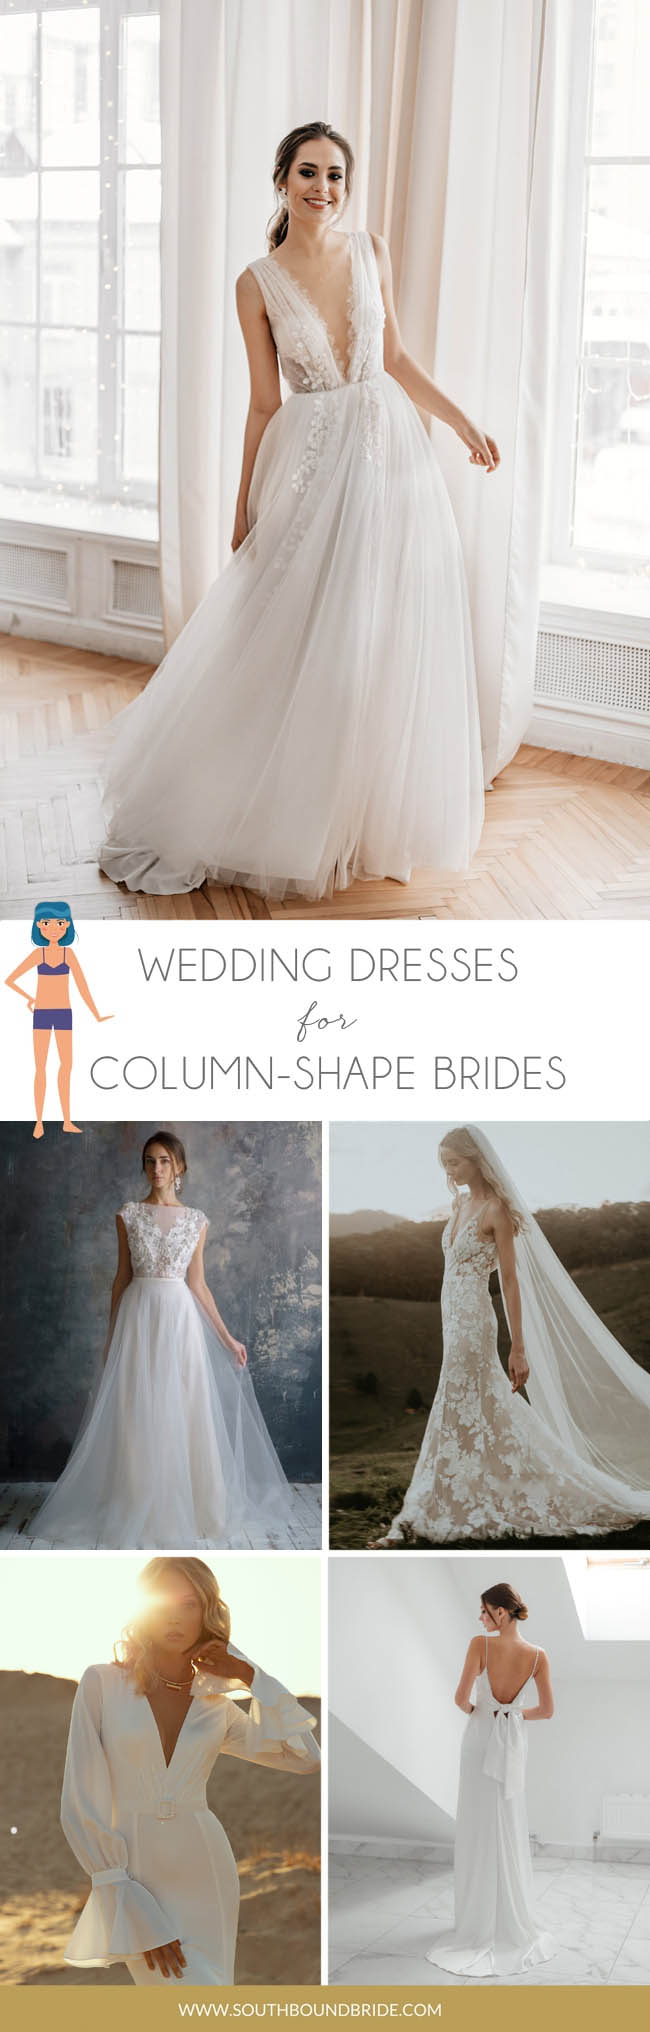 Wedding Dresses for Banana/Column/Tube Shaped Brides | SouthBound Bride